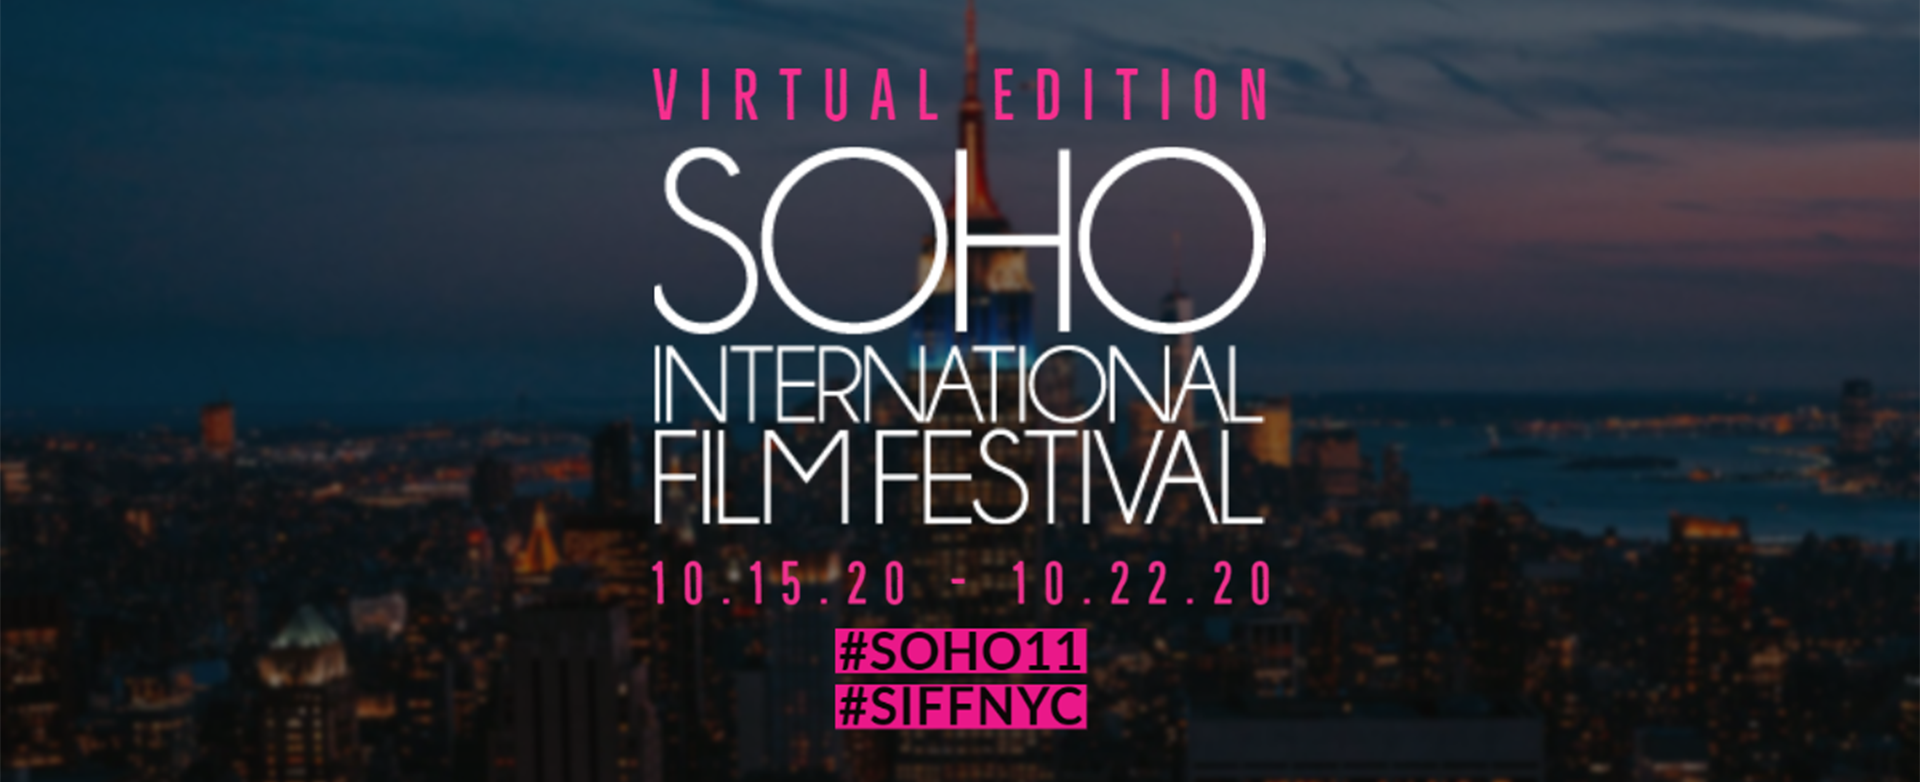 2020 SOHO INTERNATIONAL FILM FESTIVAL: VIRTUAL EDITION